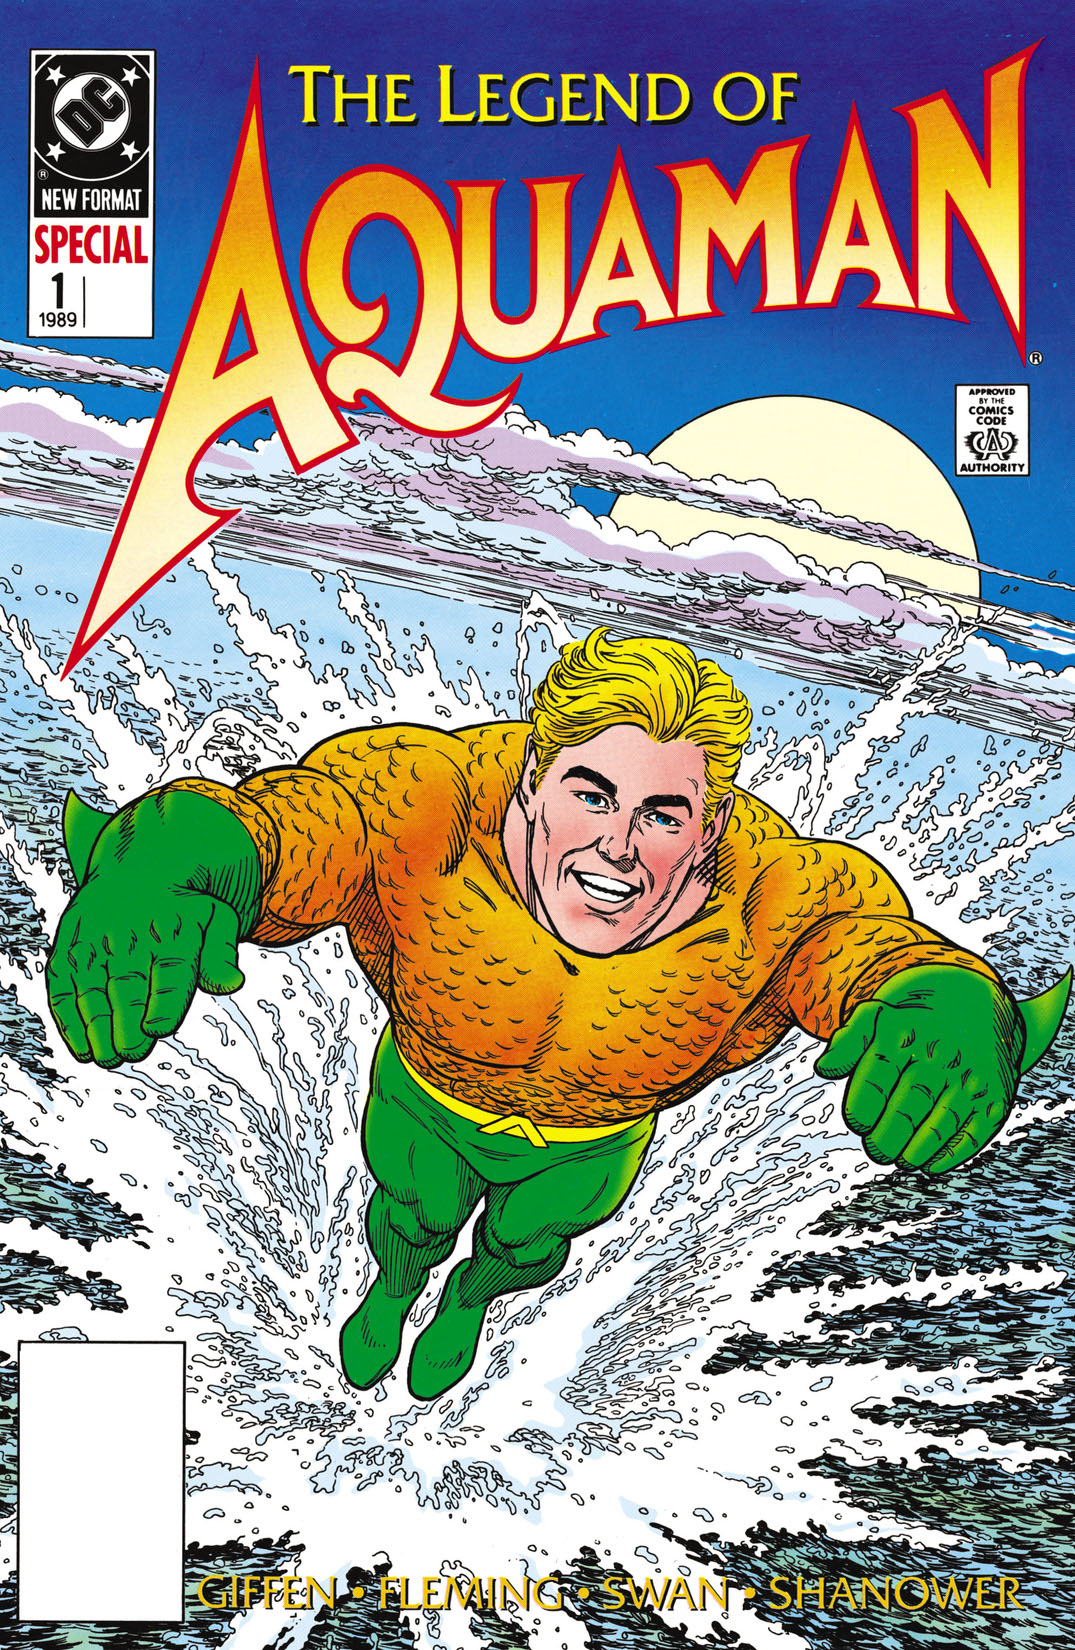 Aquaman Special #1 preview images